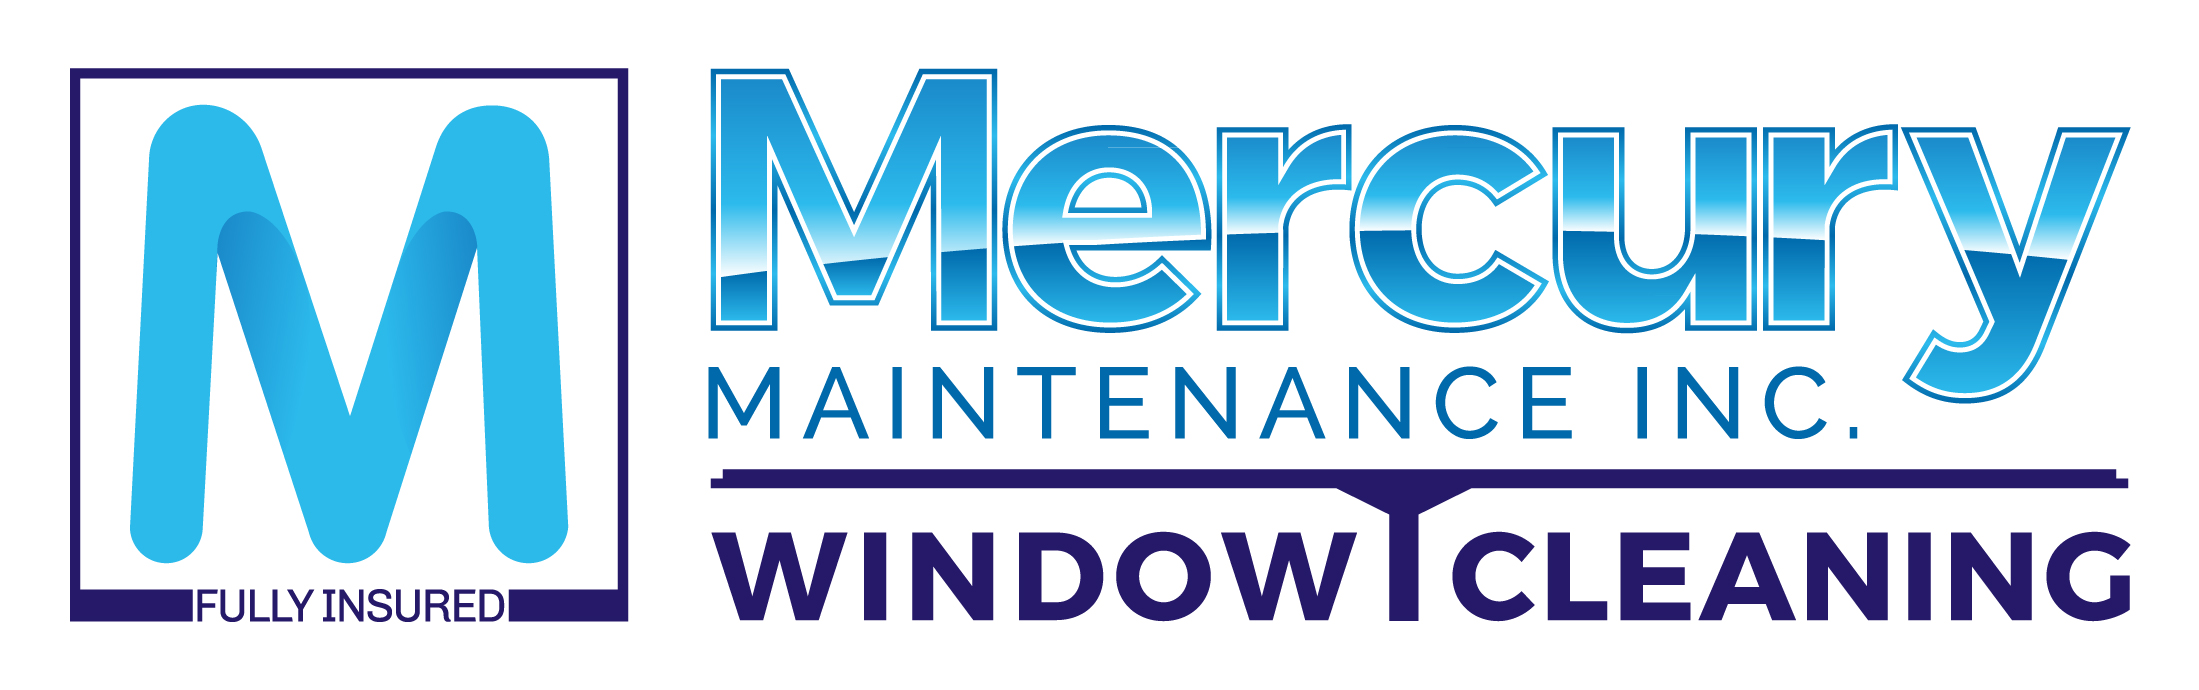 Mercury Maintenance, Inc. Logo